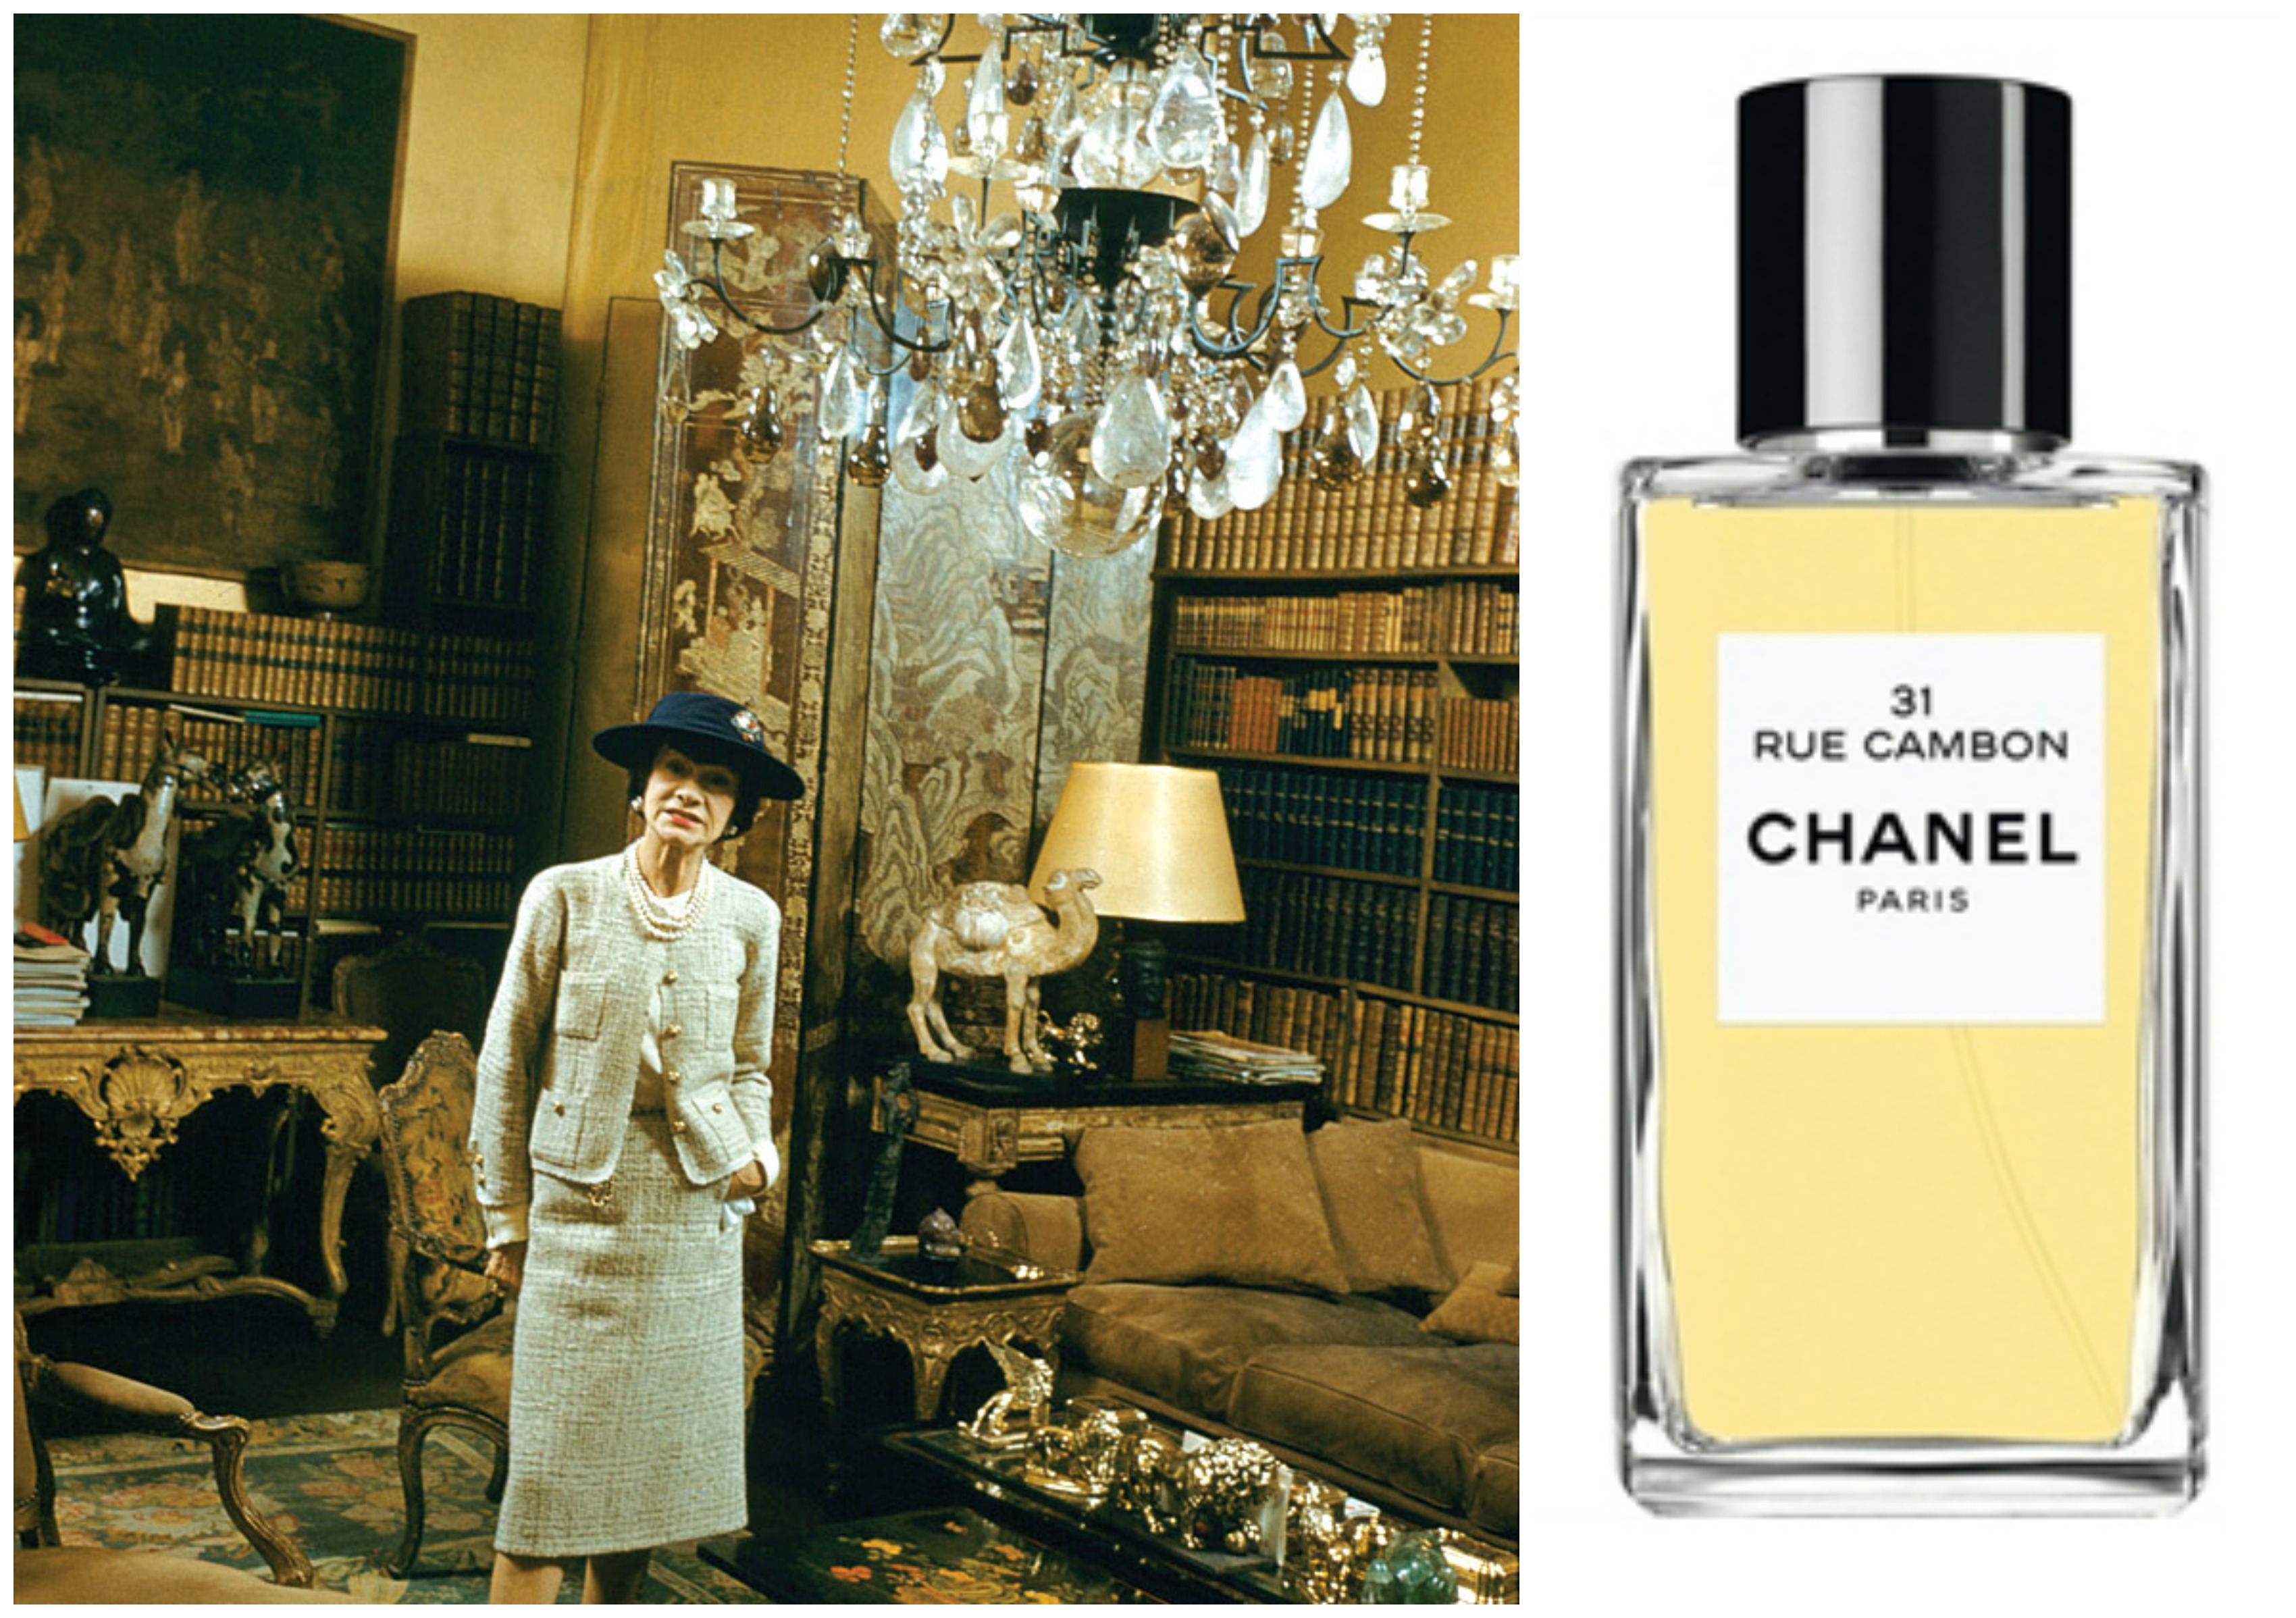 mlle-coco-chanel-in-her-home-31-rue-cambon-perfume - ÇaFleureBon